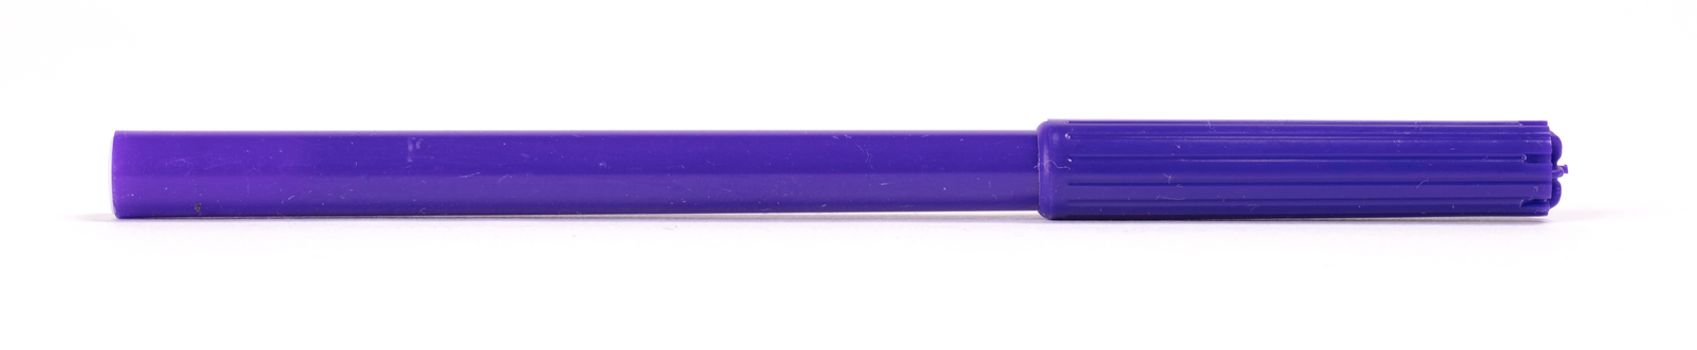 Purple felt-tip pen isolated on white background